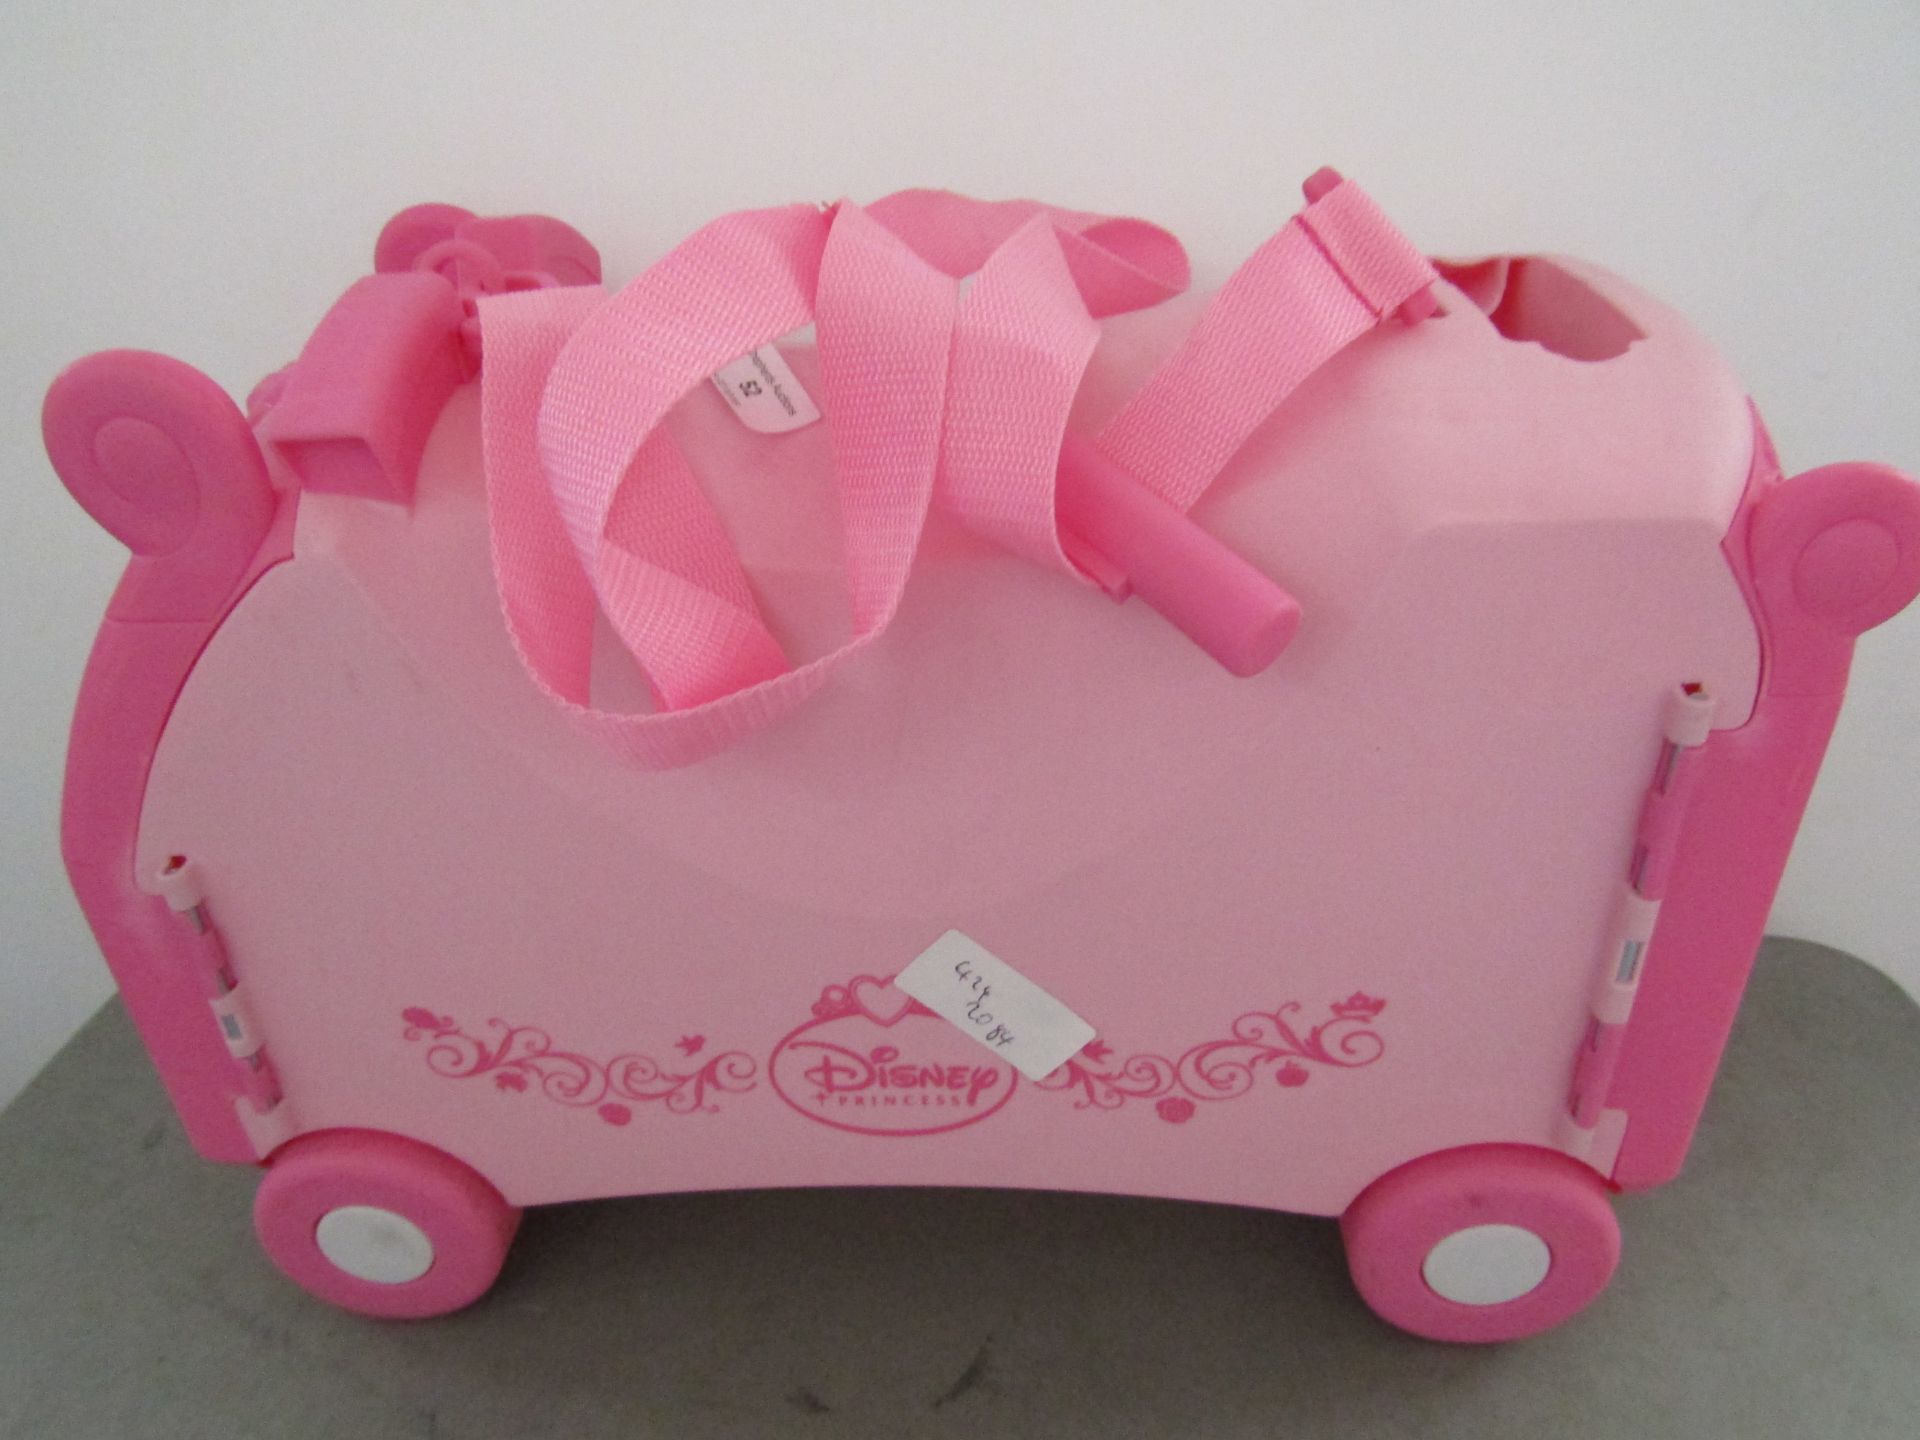 Vrum Disney Princess Childs Ride on Suitcase, RRP £40